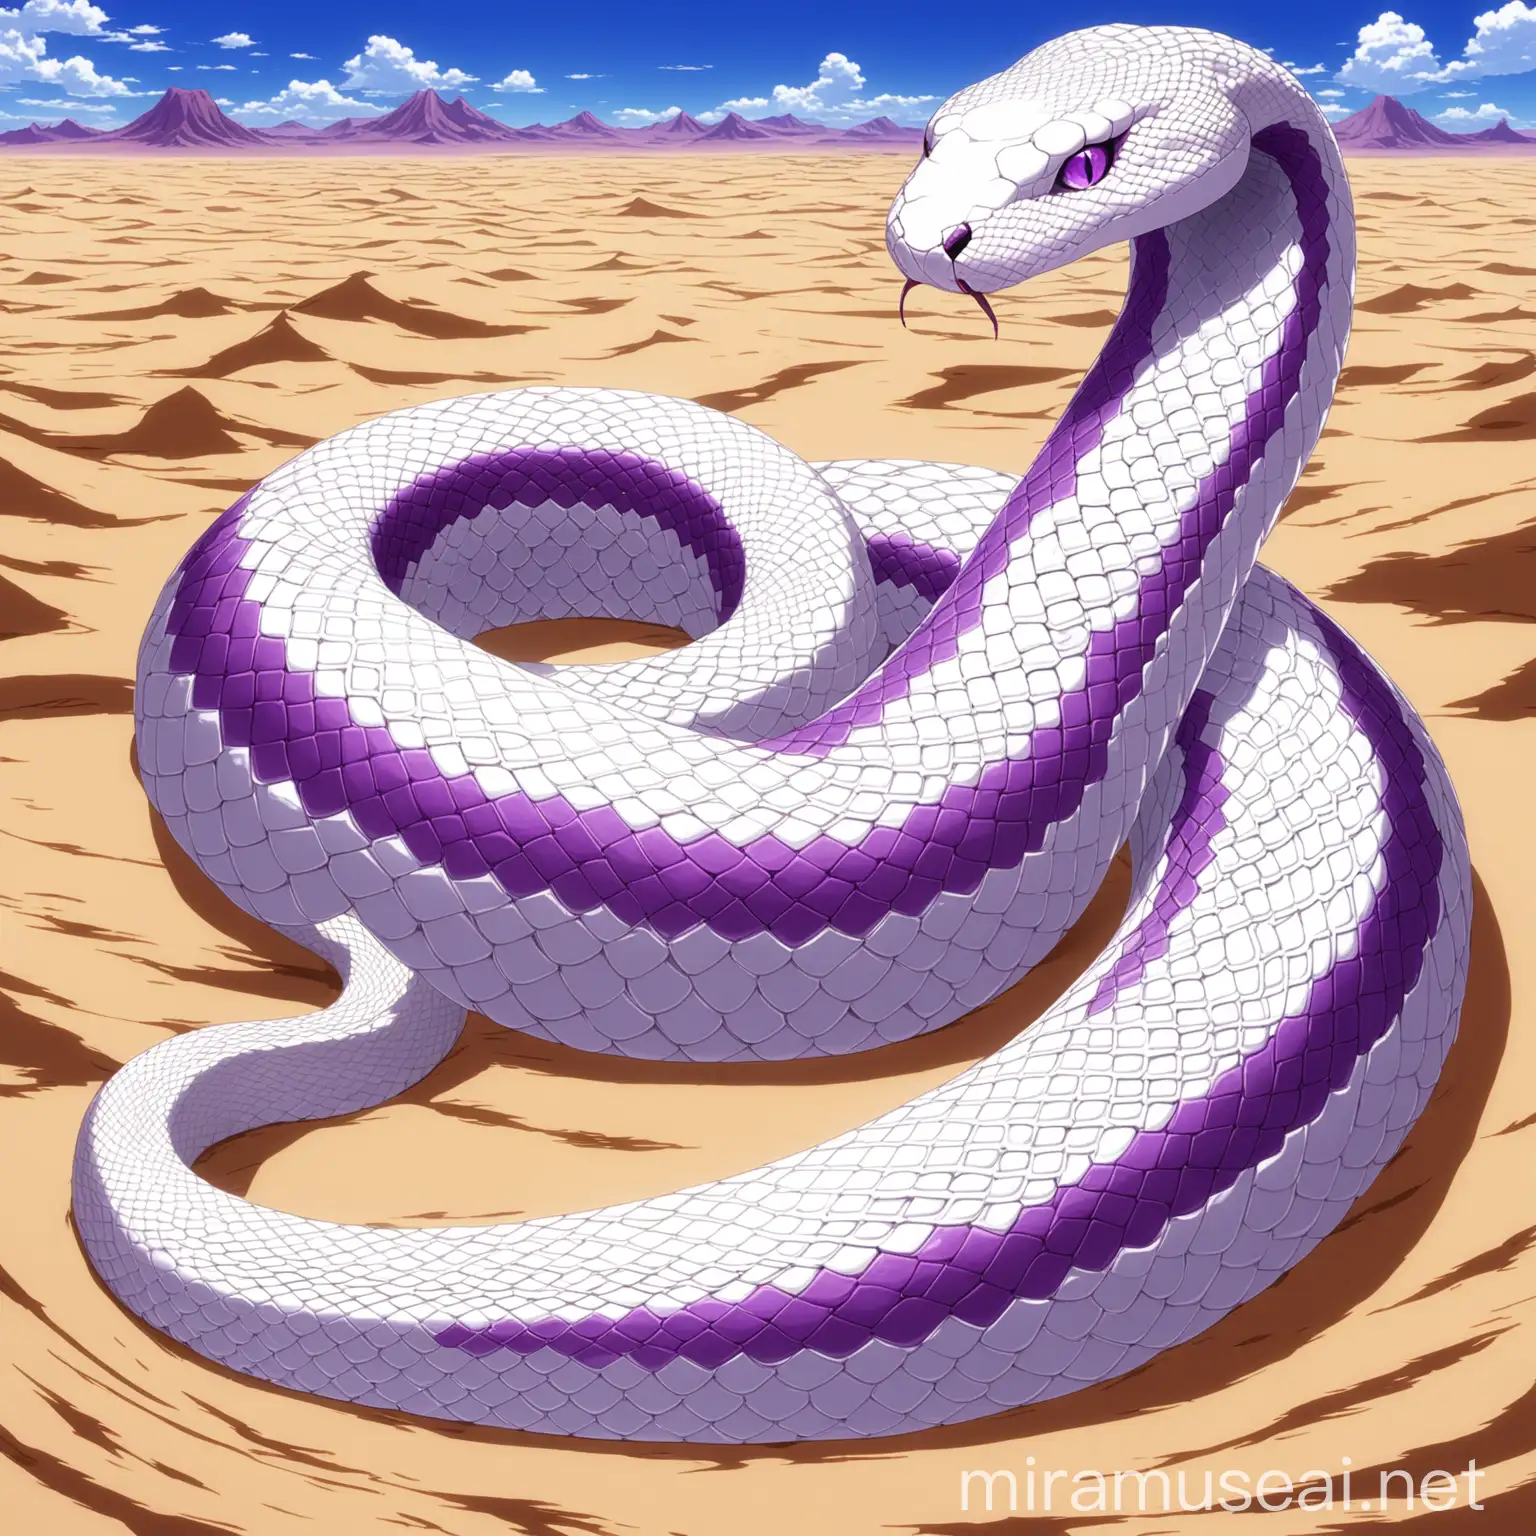 a giant white snake of the desert, it is full of purple stripes, it has purple eyes, in anime